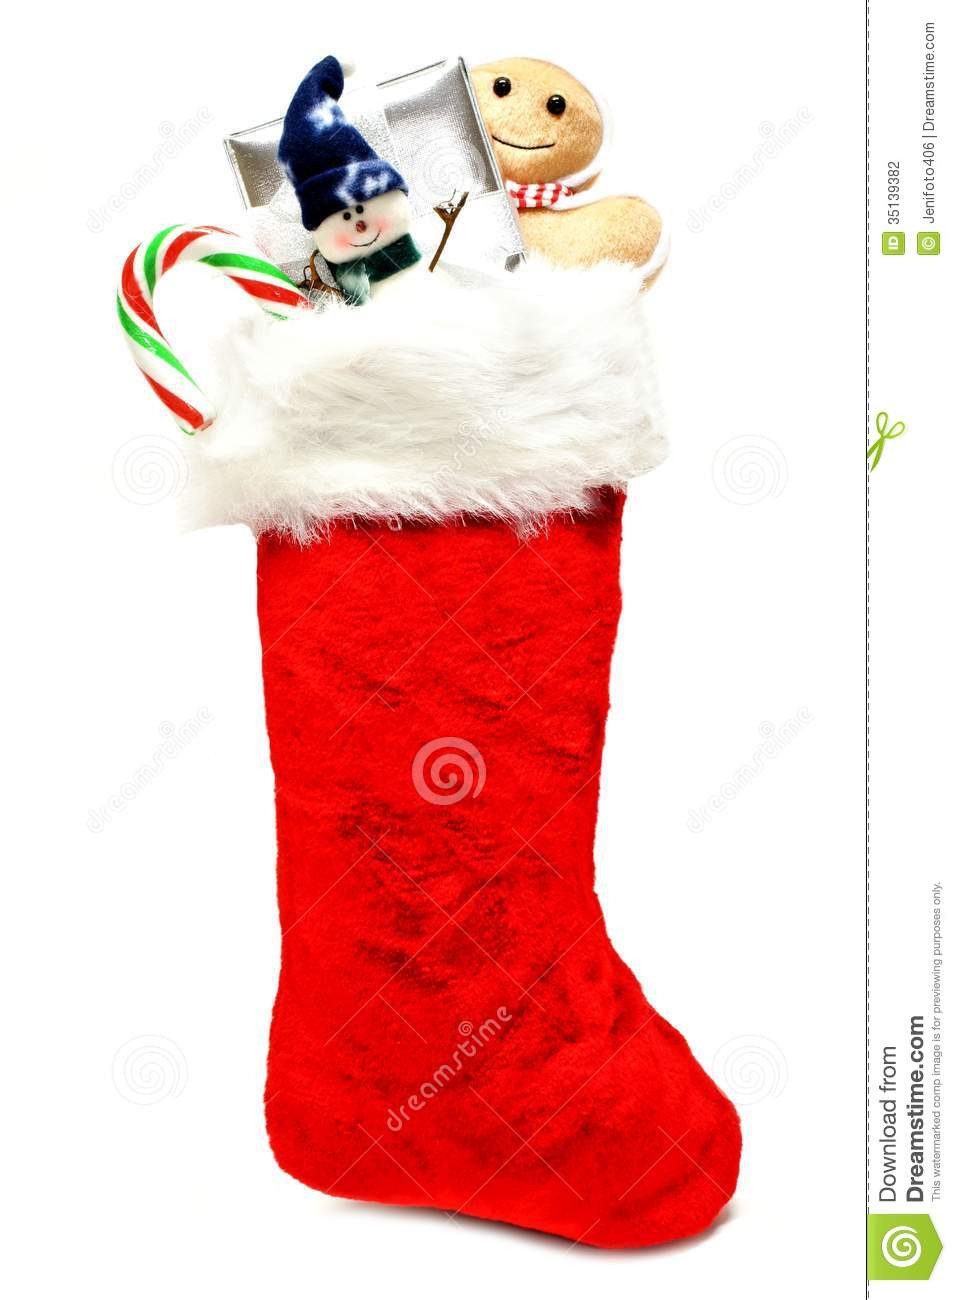 Candy Filled Christmas Stockings
 Christmas stocking stock photo Image of ts festive